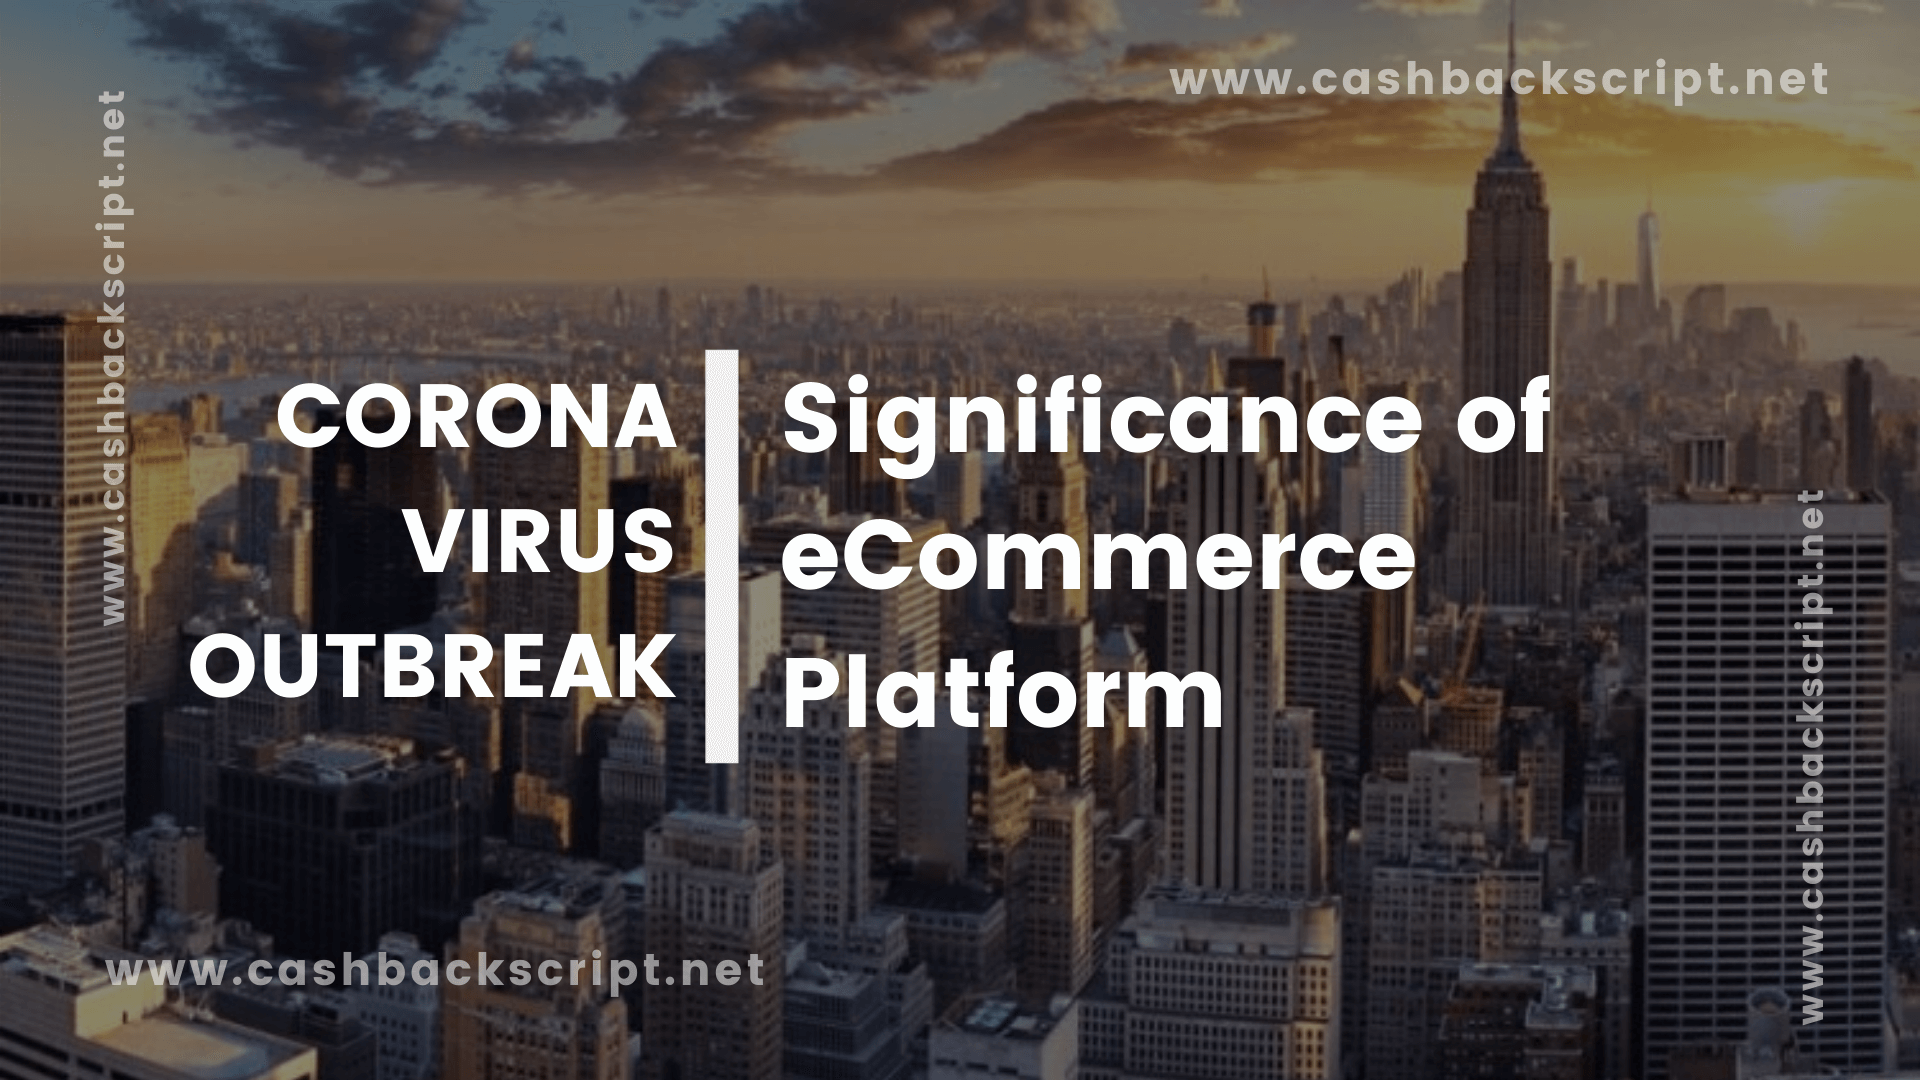 Corona Virus Outbreak - Significance of eCommerce Platform